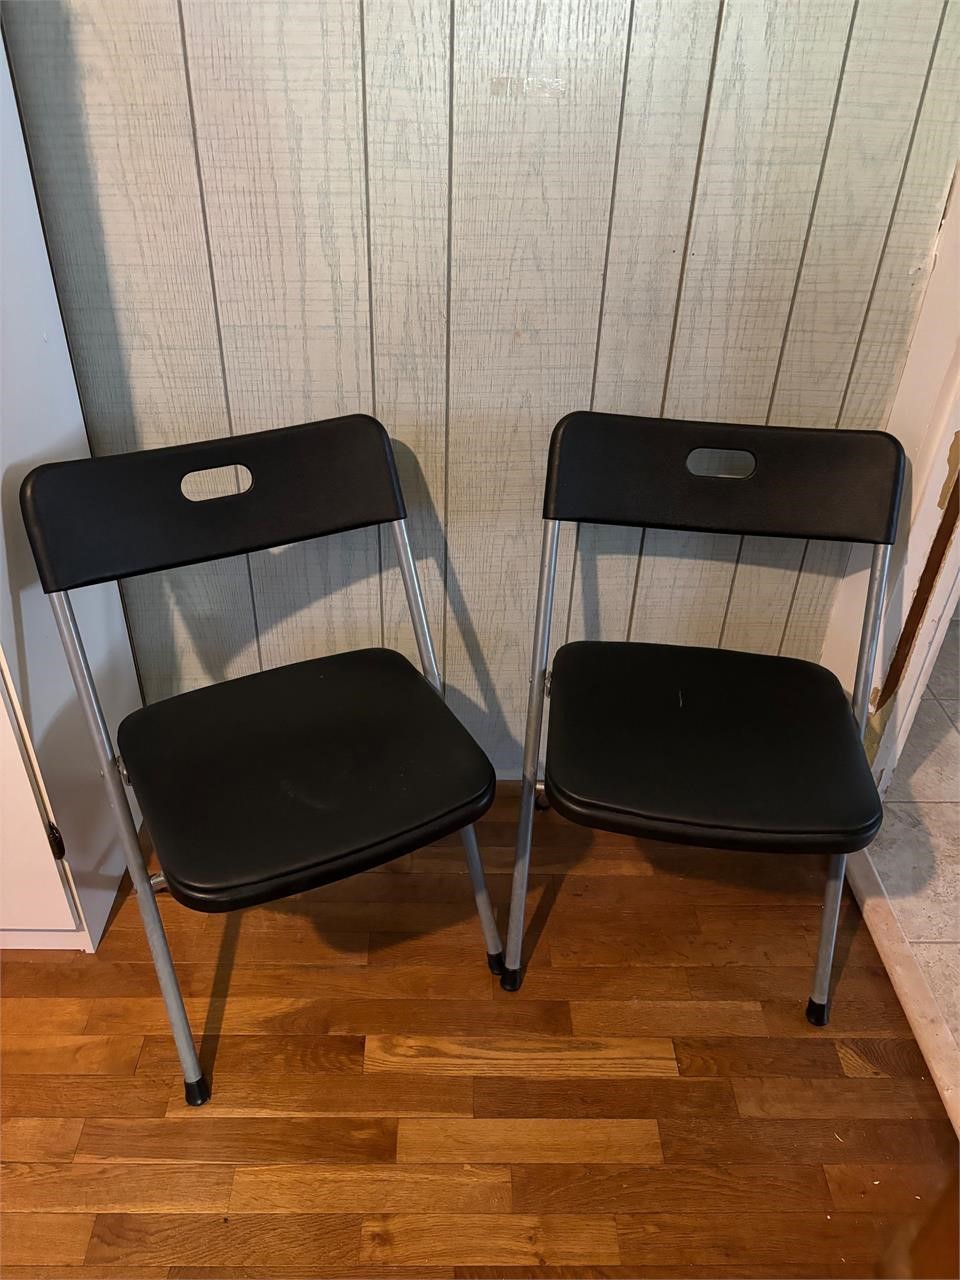 Cosco Folding Chairs